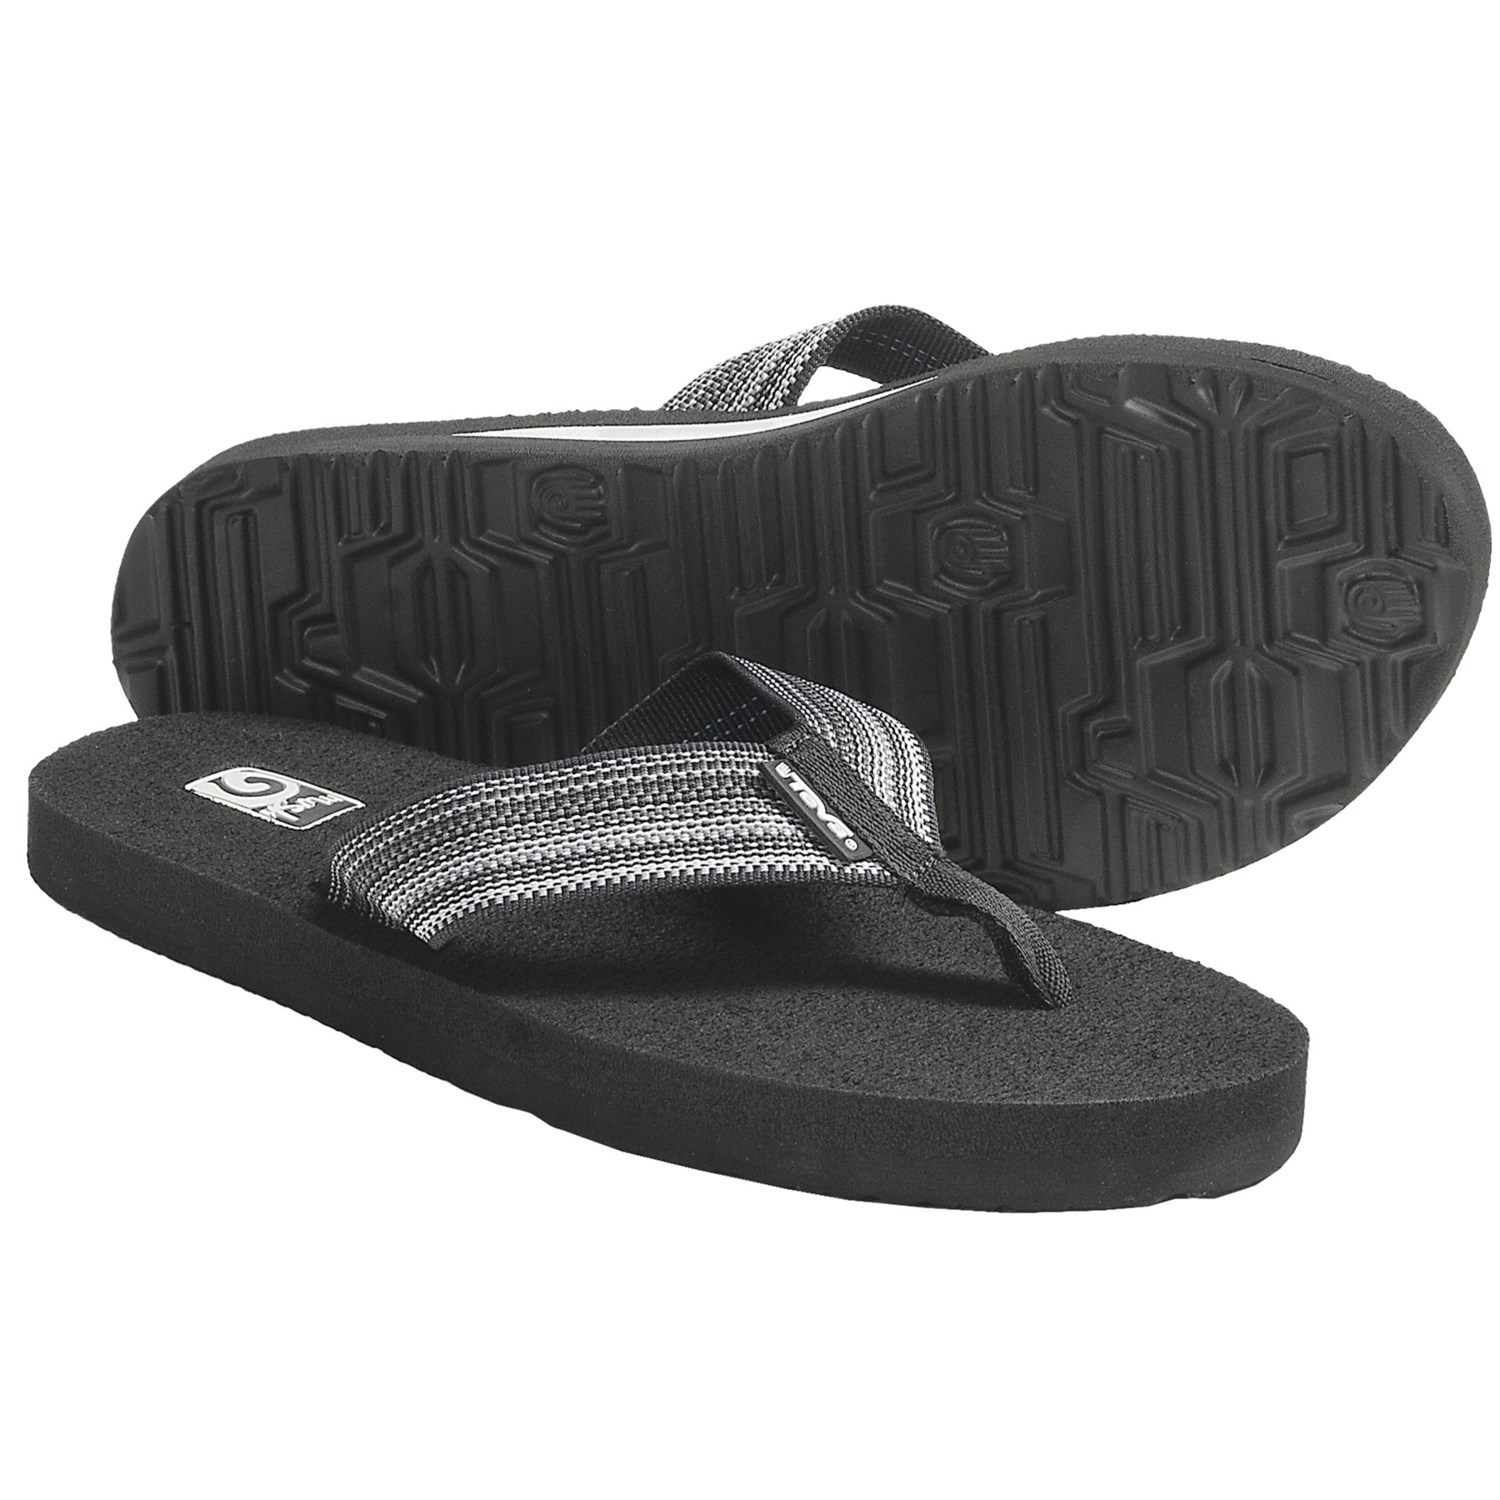 Teva Mush II Thong Sandals - Flip-Flops (For Women) in Antiguous Black ...